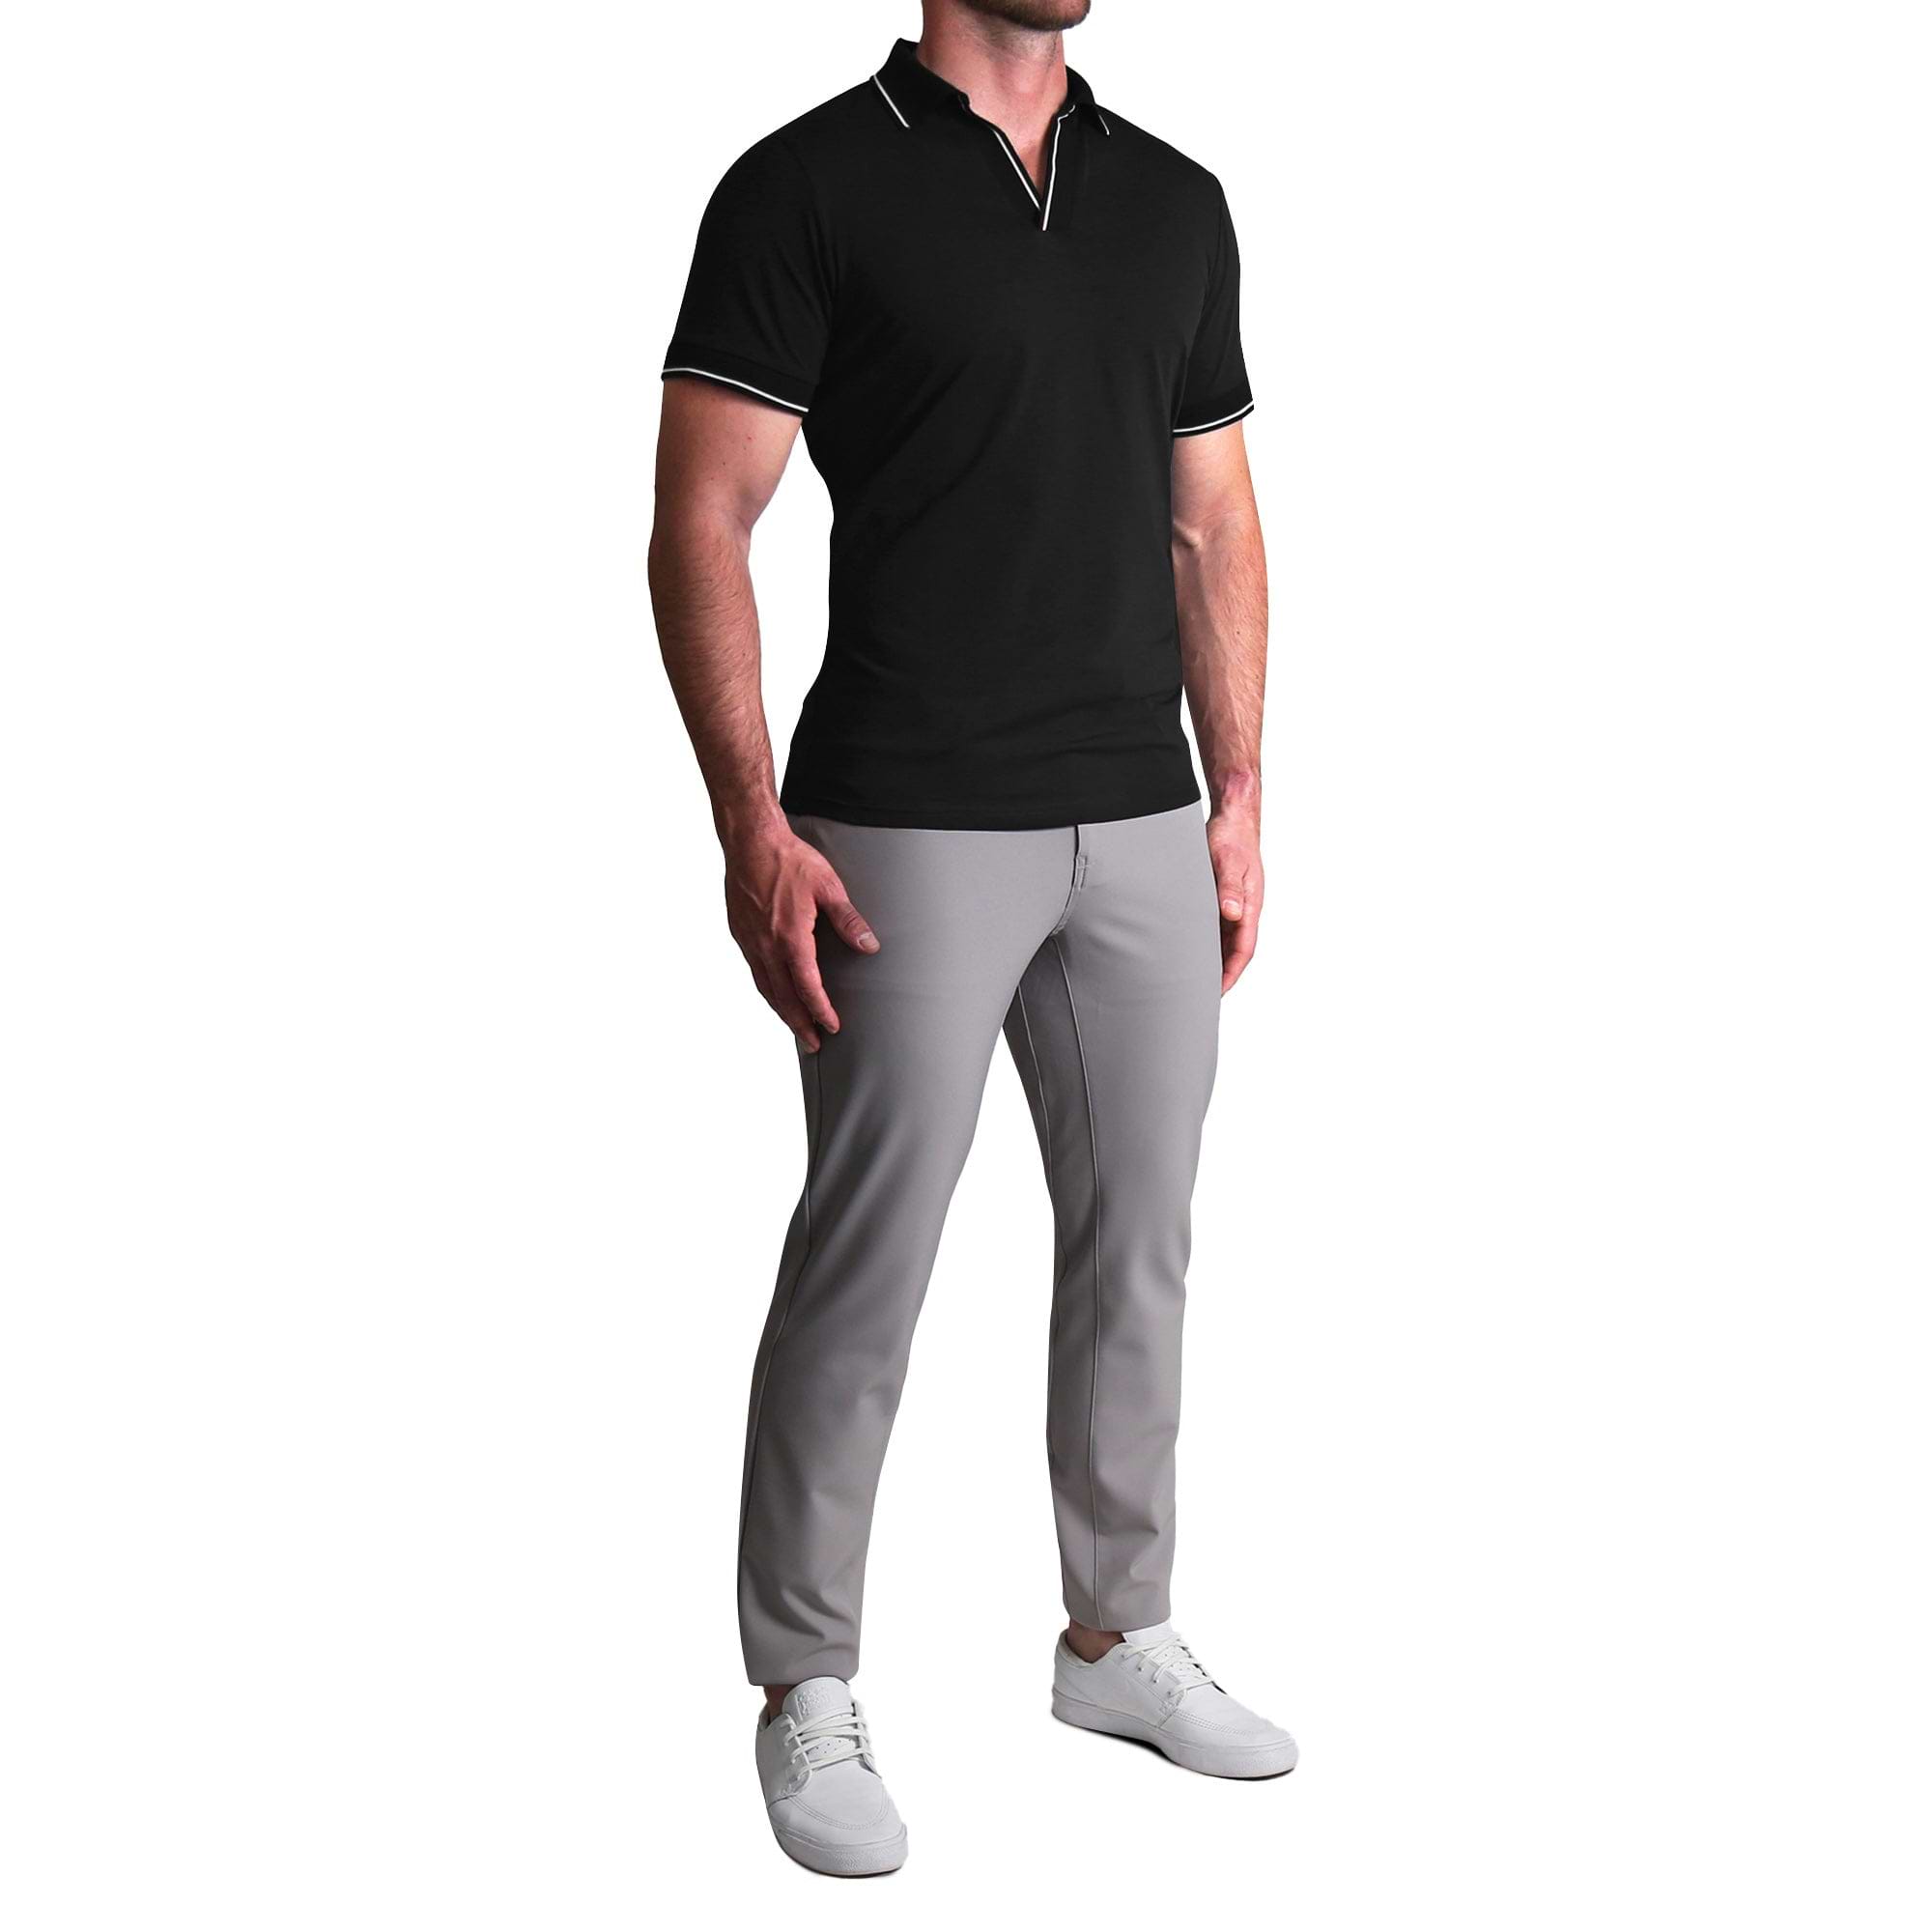 What's your opinion on the grey slacks / black shirt combo? :  r/malefashionadvice